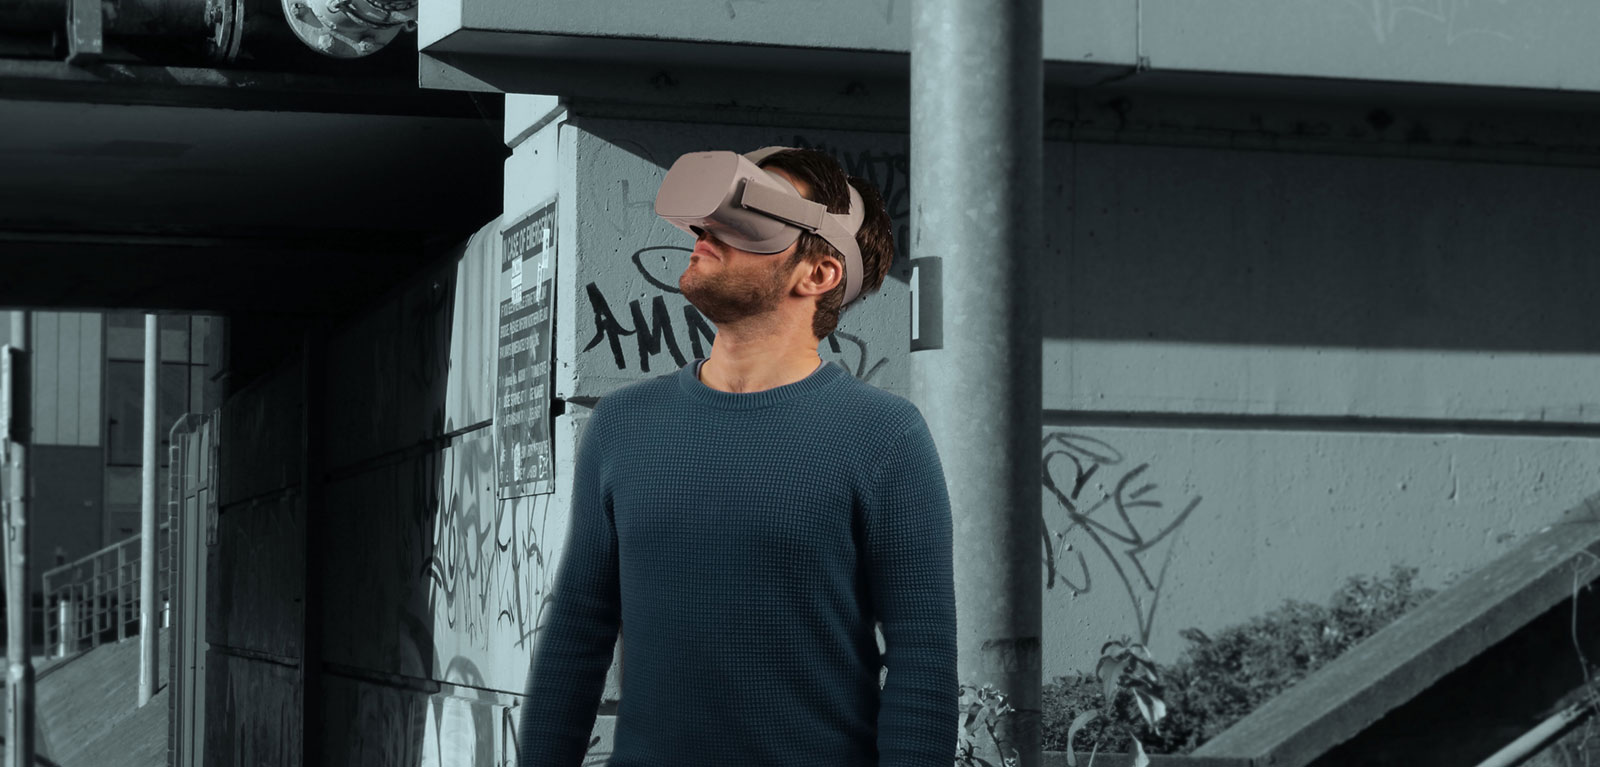 Photo: man wearing a VR headset